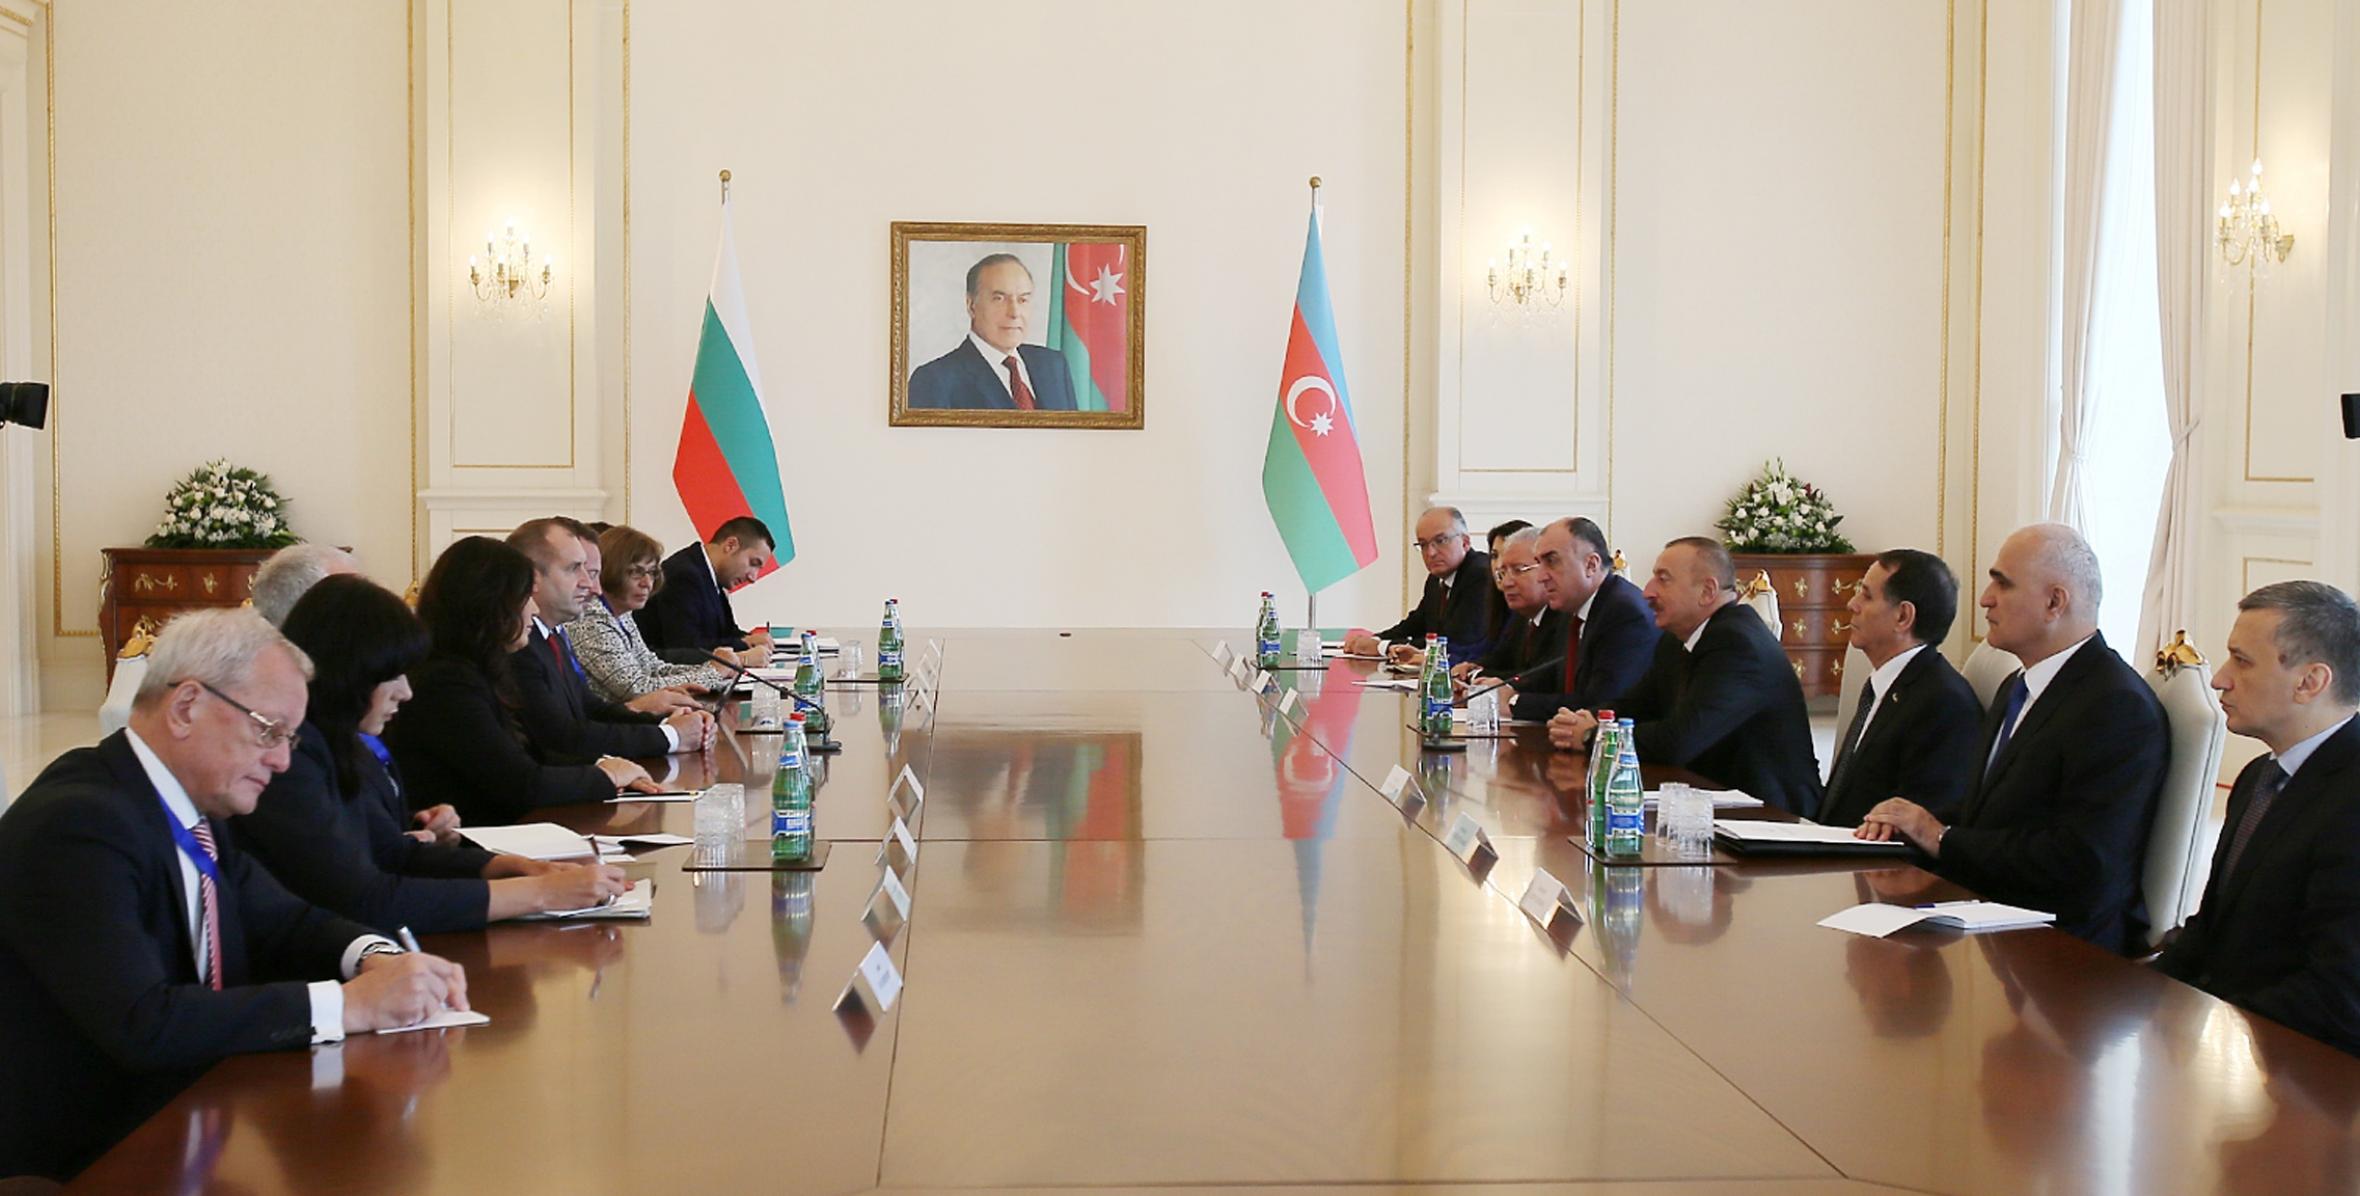 Presidents of Azerbaijan and Bulgaria met in expanded format